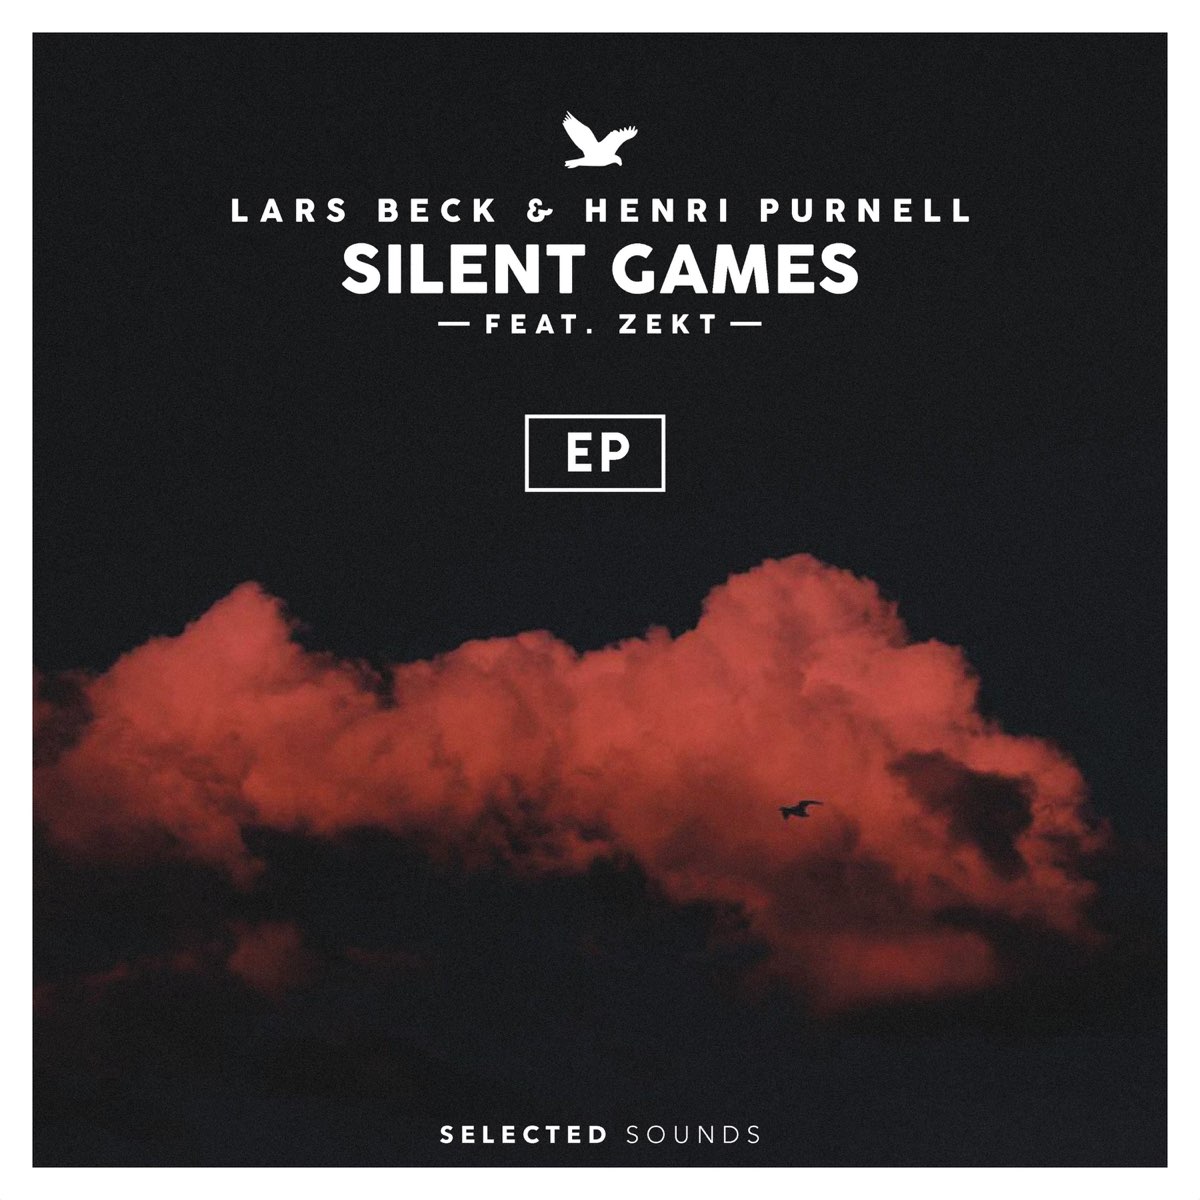 Zekt. Lars Beck & Henri Purnell - Silent games (UOAK Remix). Revelries Henri Purnell - feel it still.